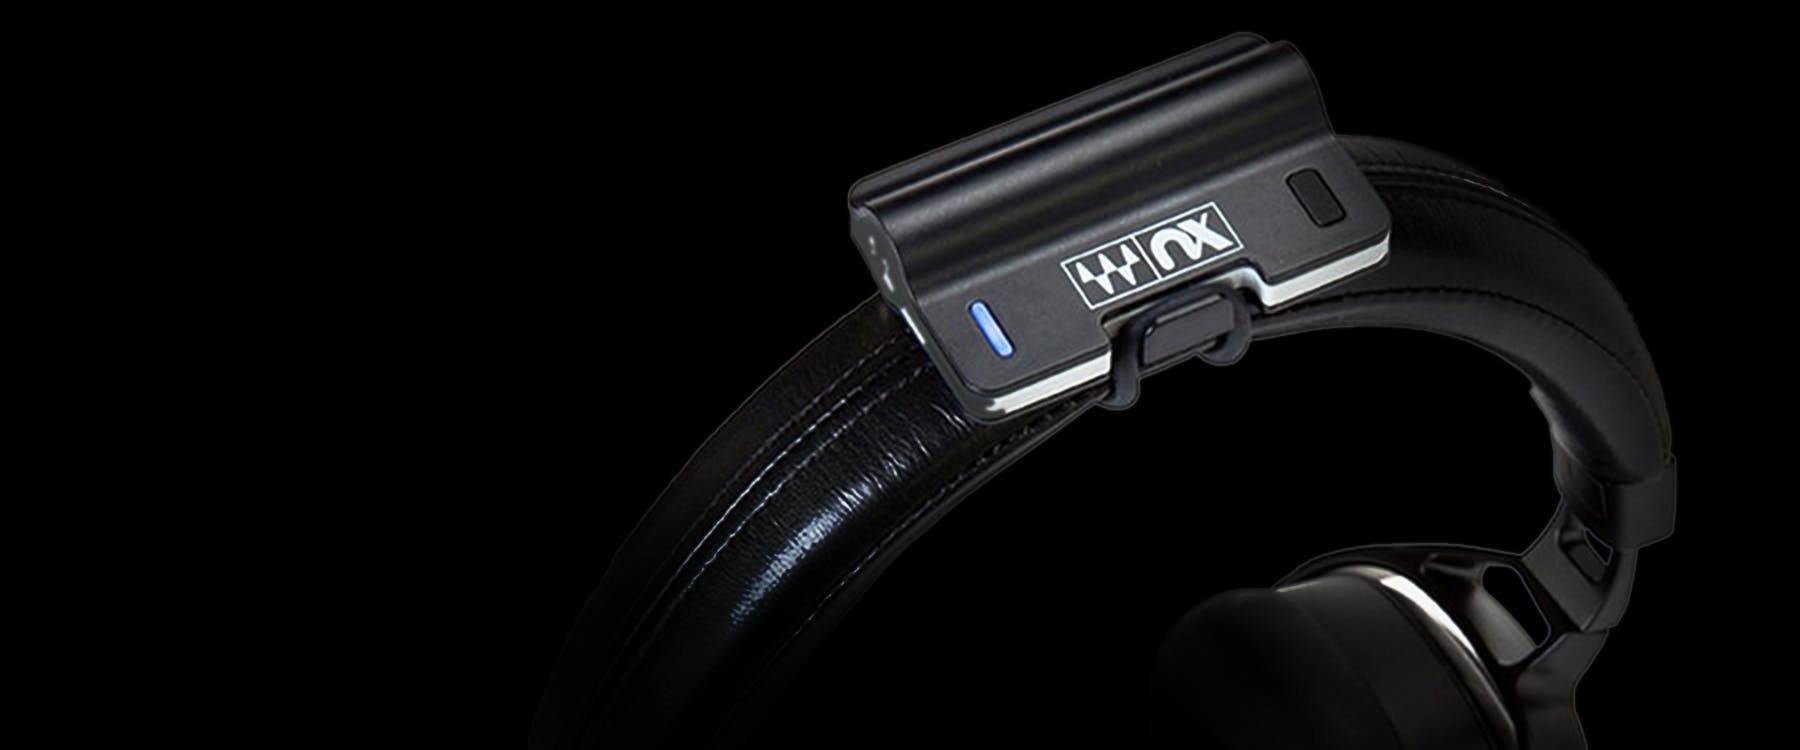 Nx Head Tracker for Headphones | Hardware - Waves Audio